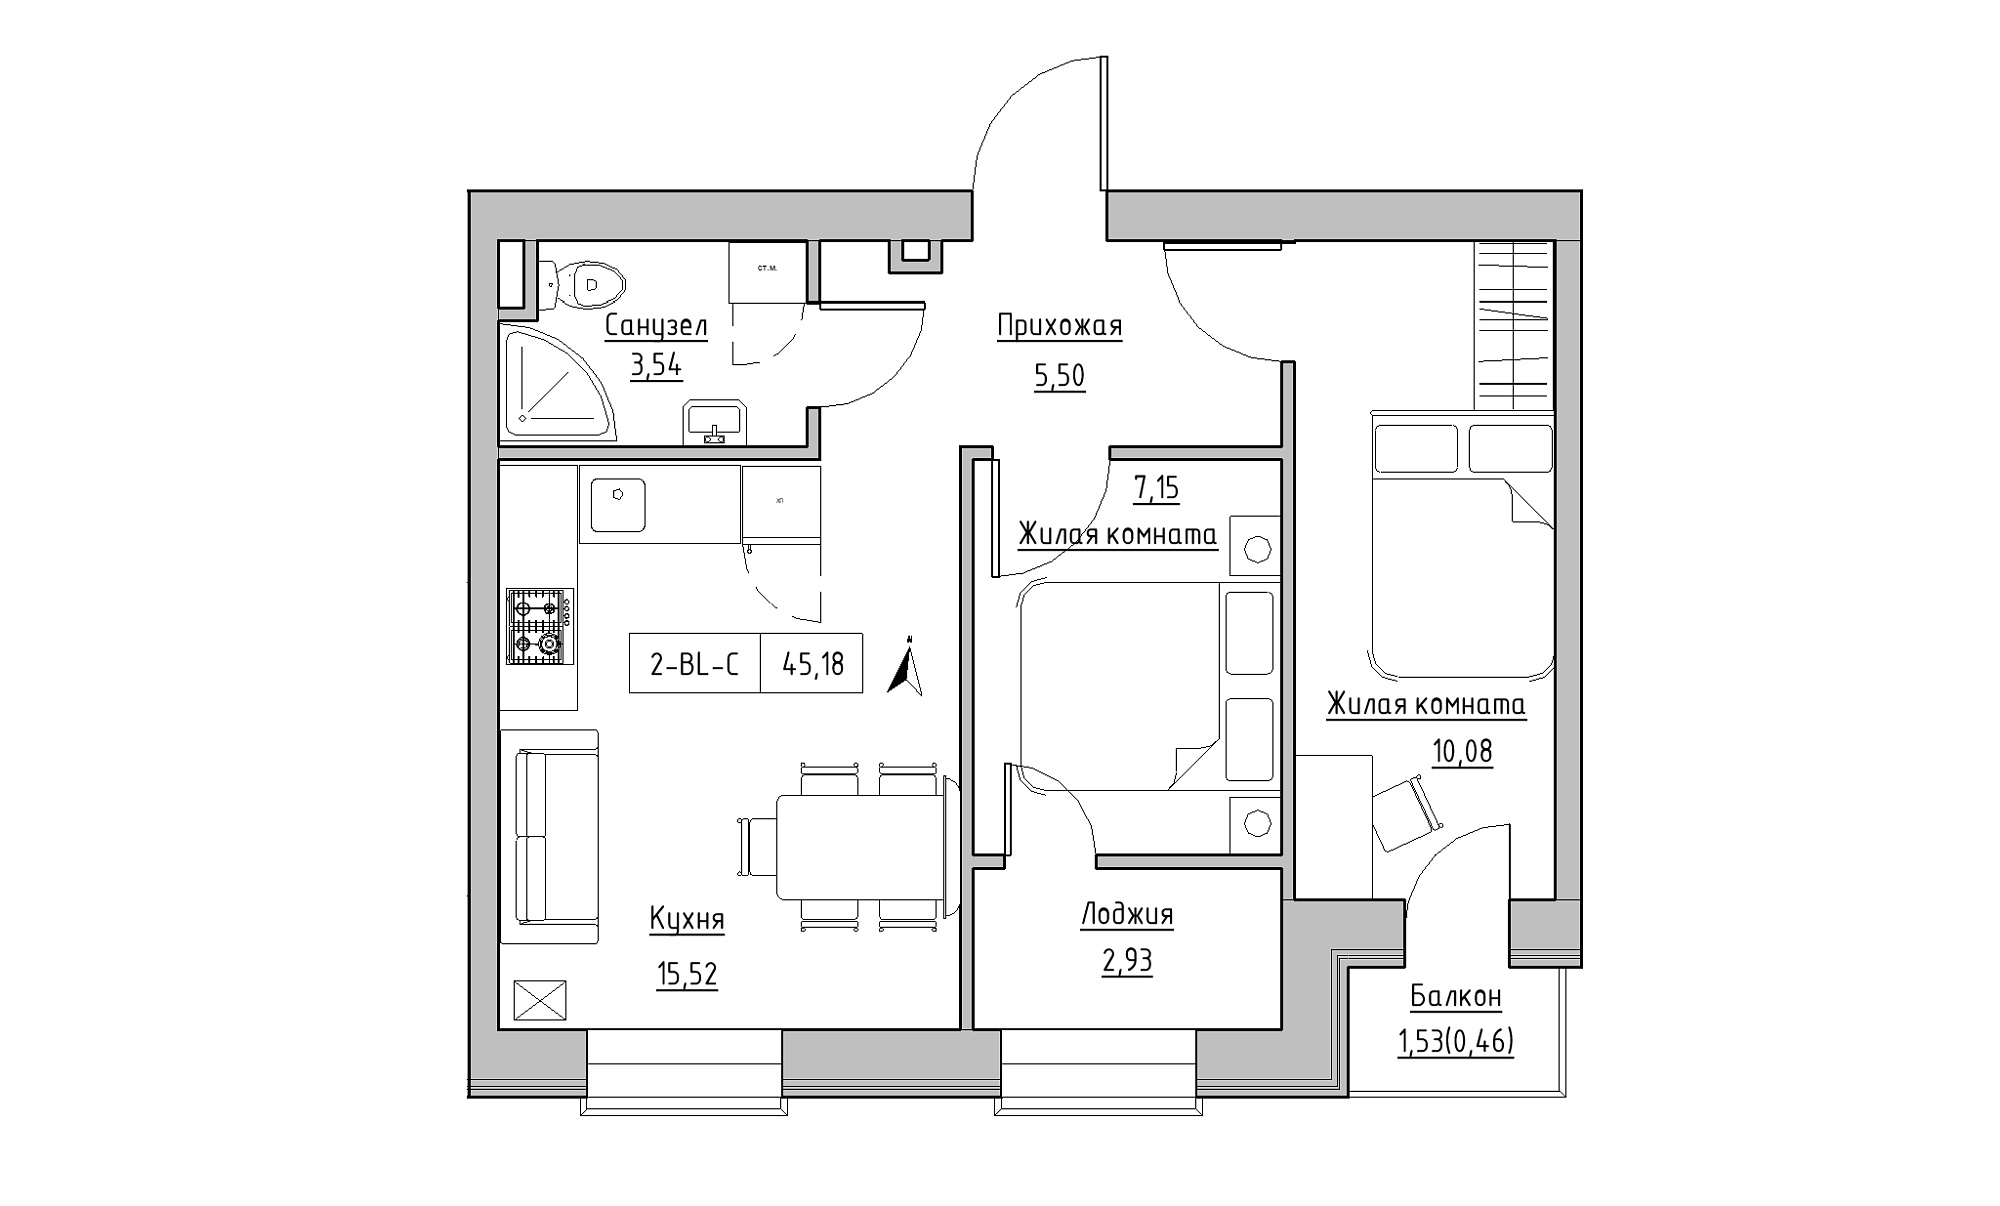 Planning 2-rm flats area 45.18m2, KS-023-02/0009.